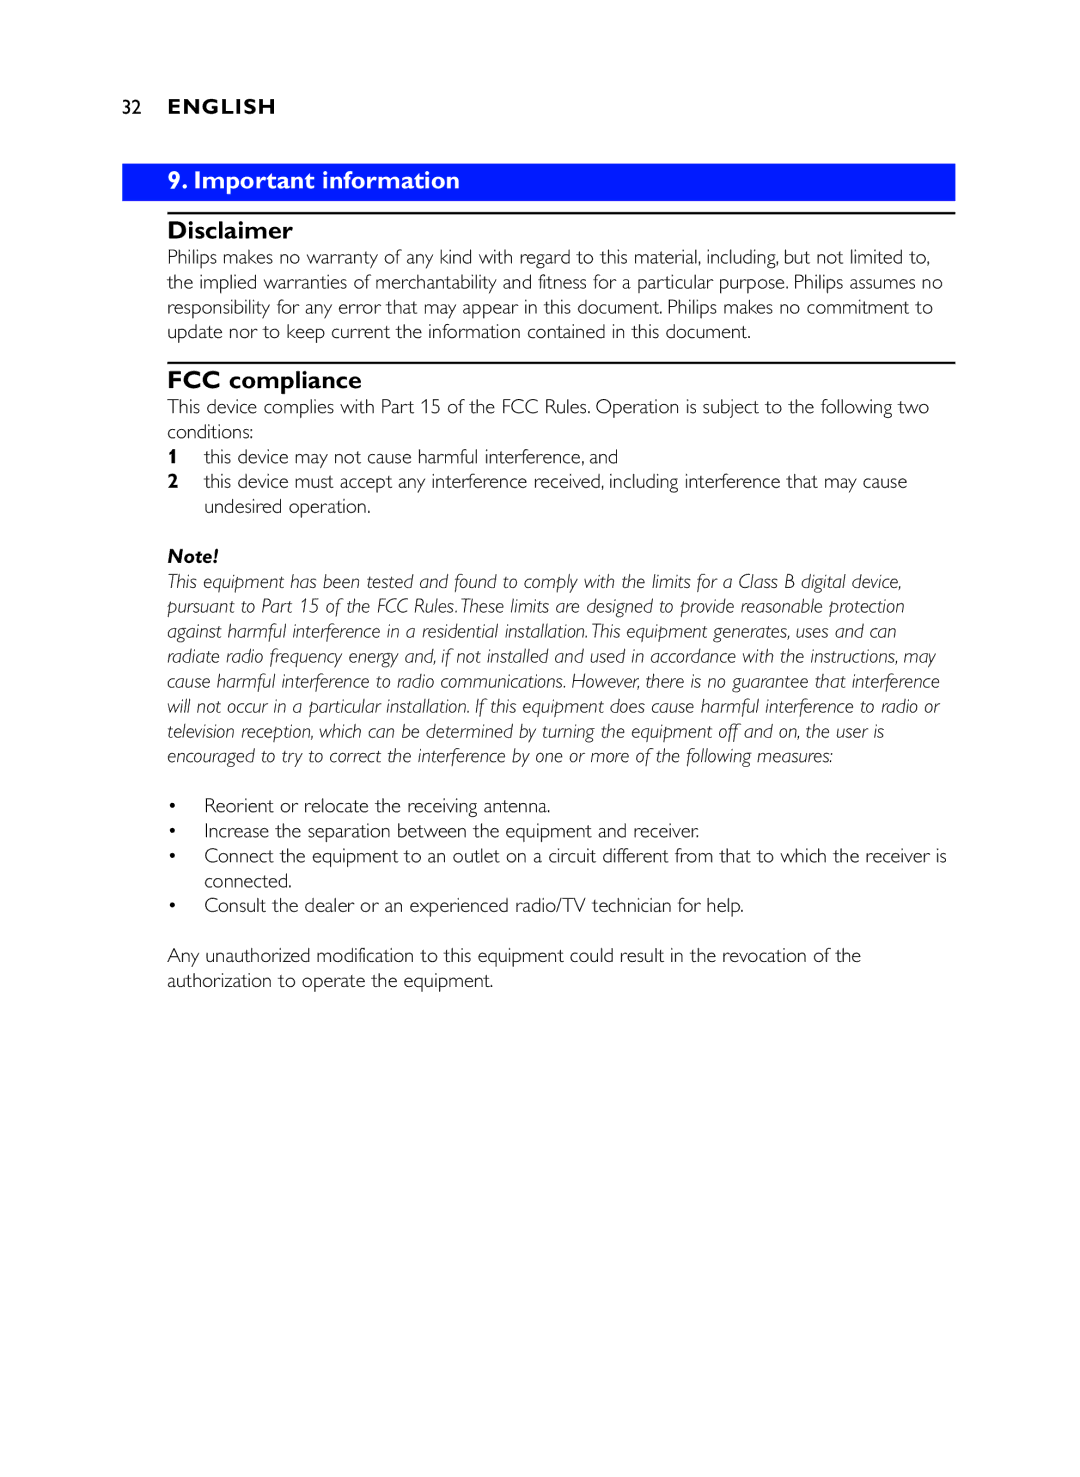 Philips DMVC1300K manual Important information, Disclaimer, FCC compliance 